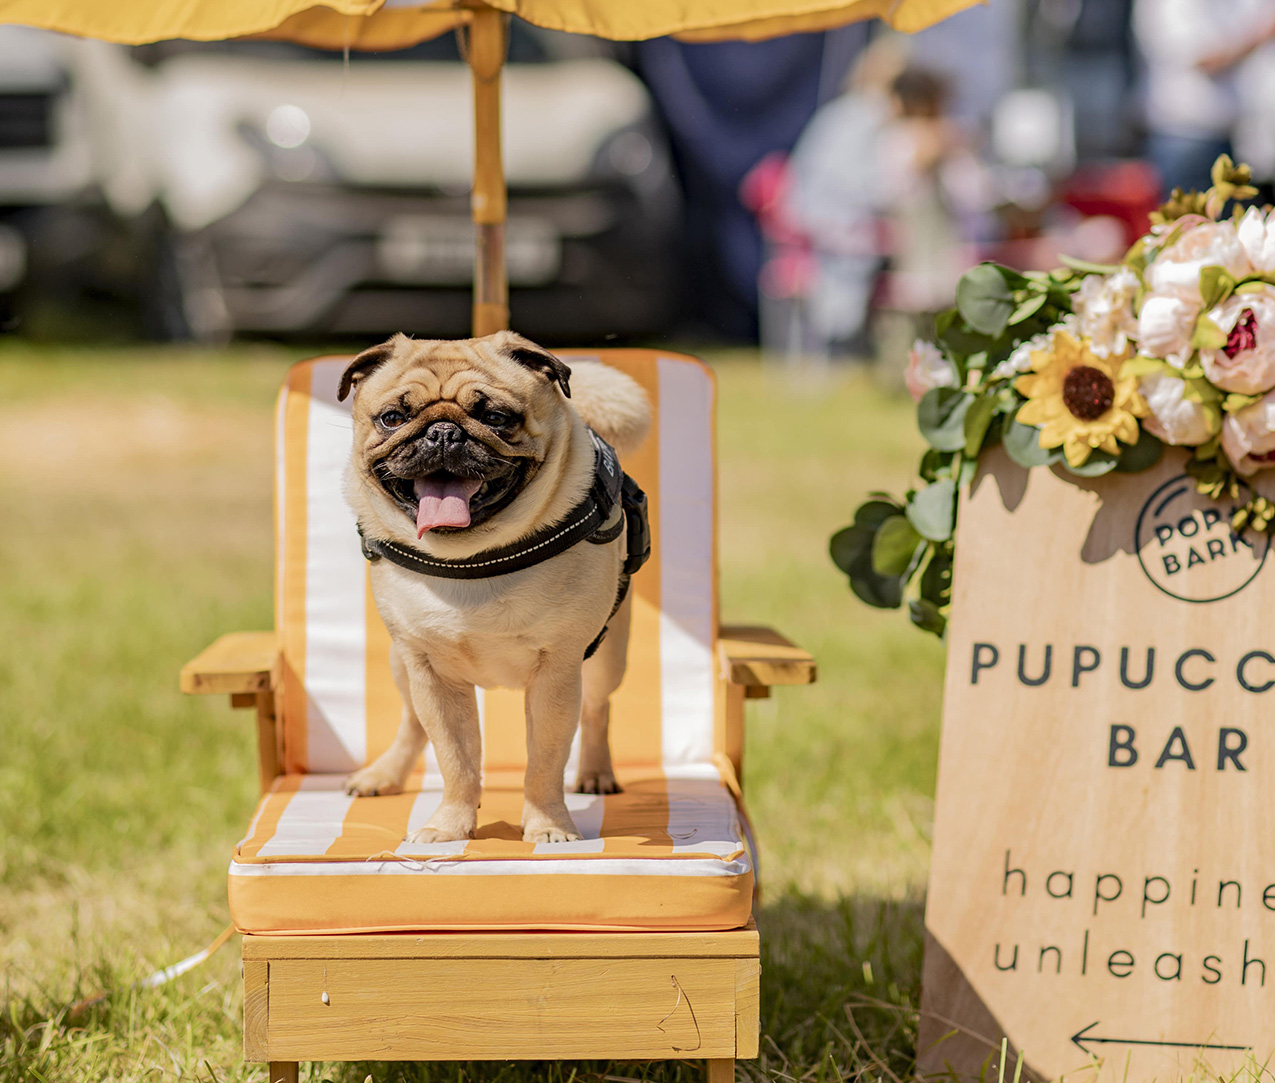 Pug sat on a small beach chair at Dogstival festival.